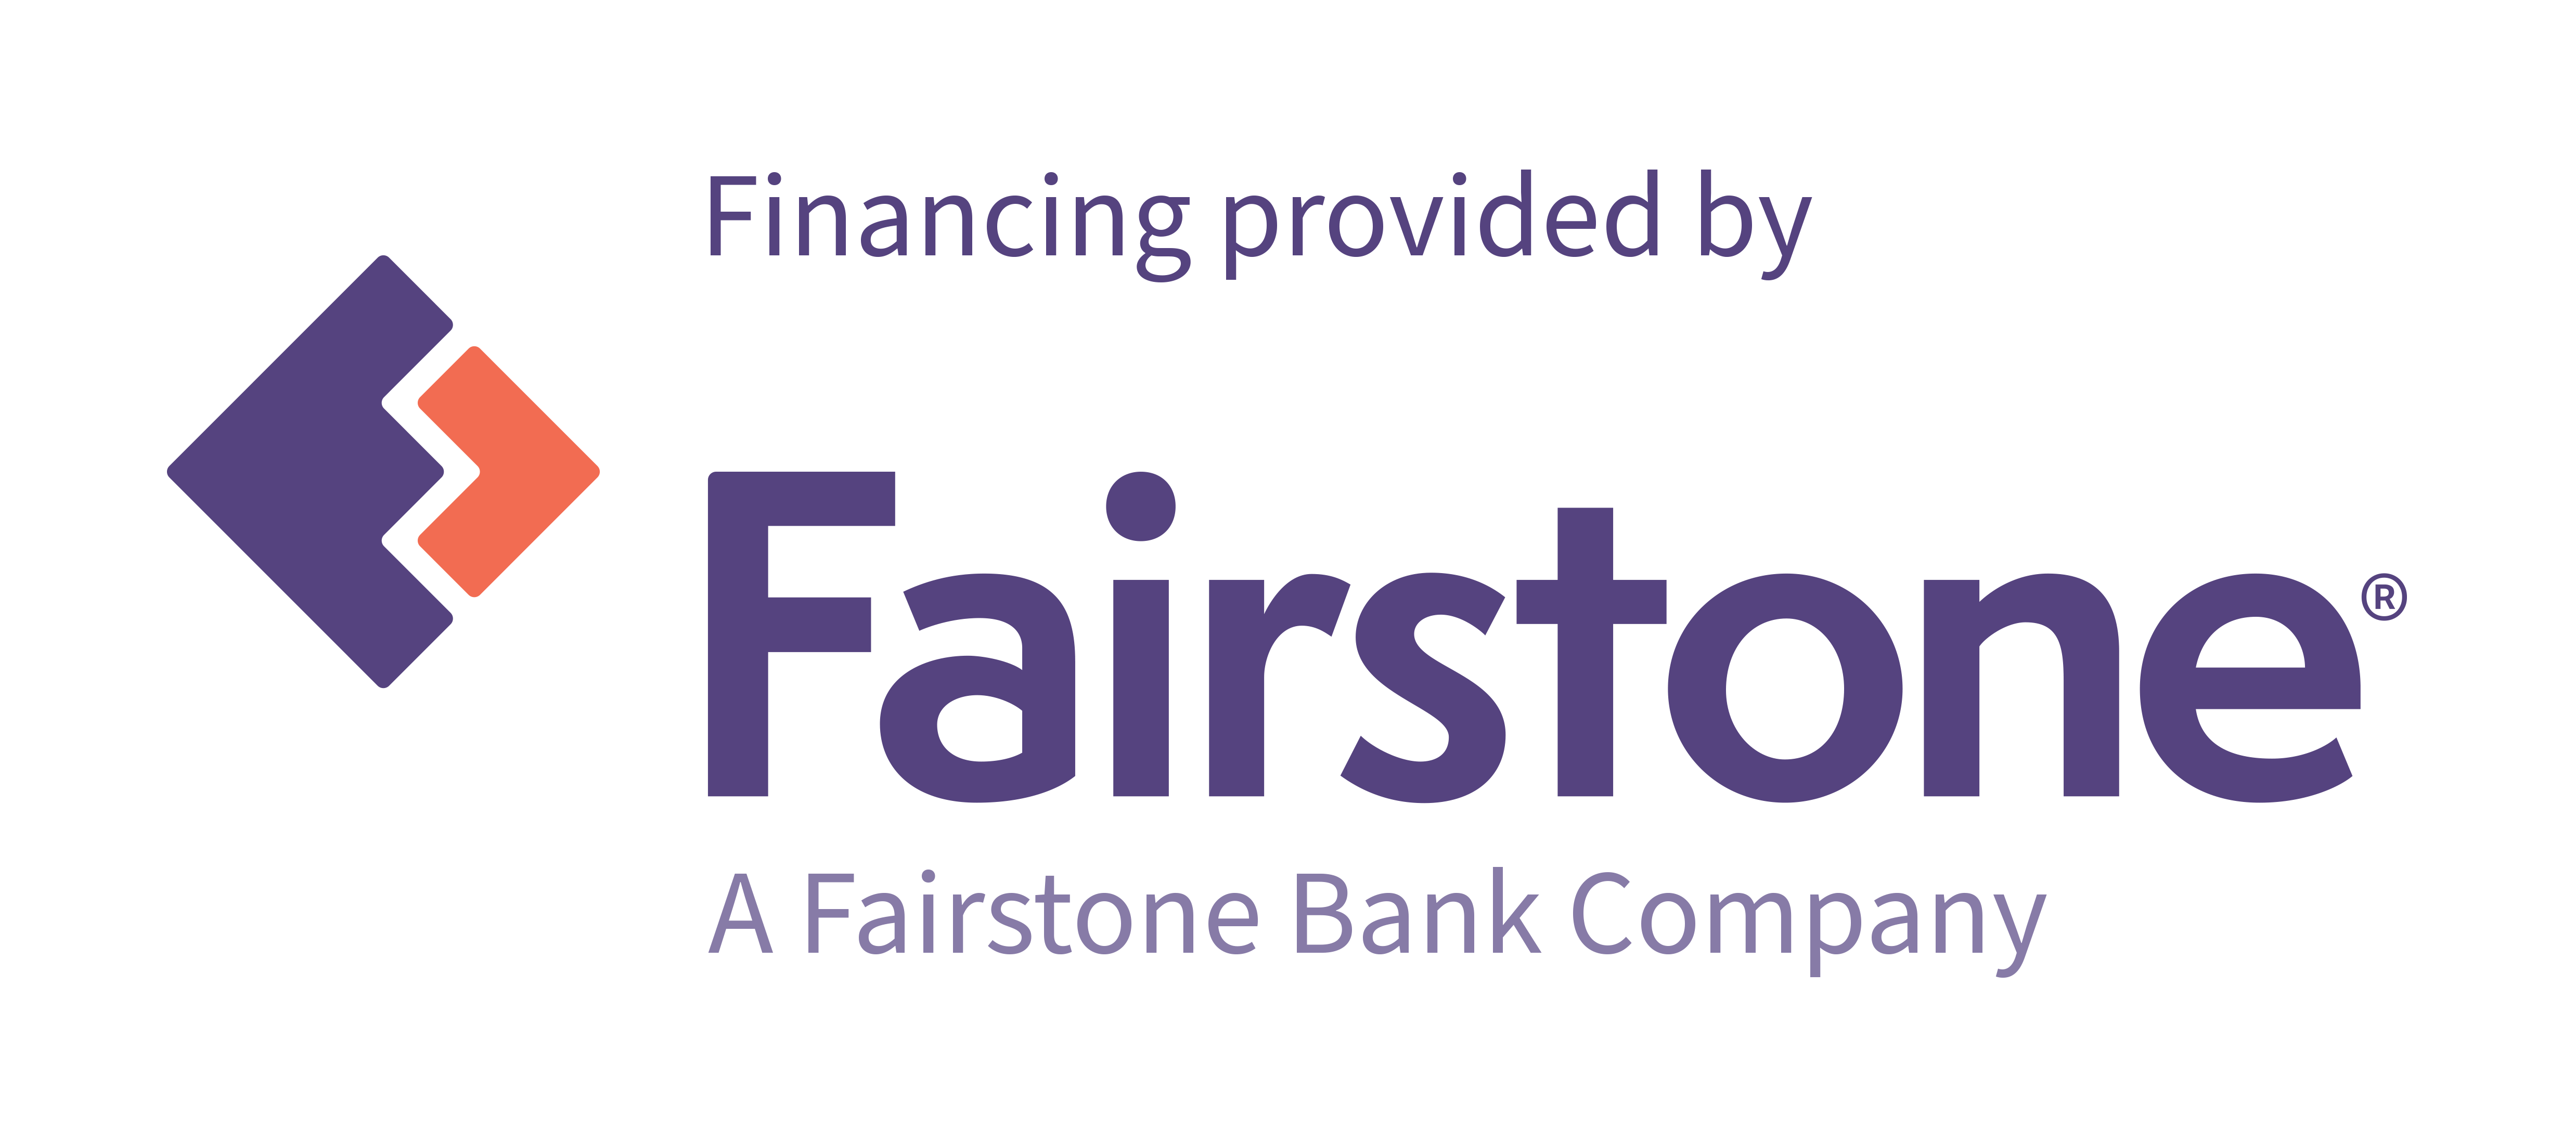 financement flexible fairstone projet cuisine salle de bain